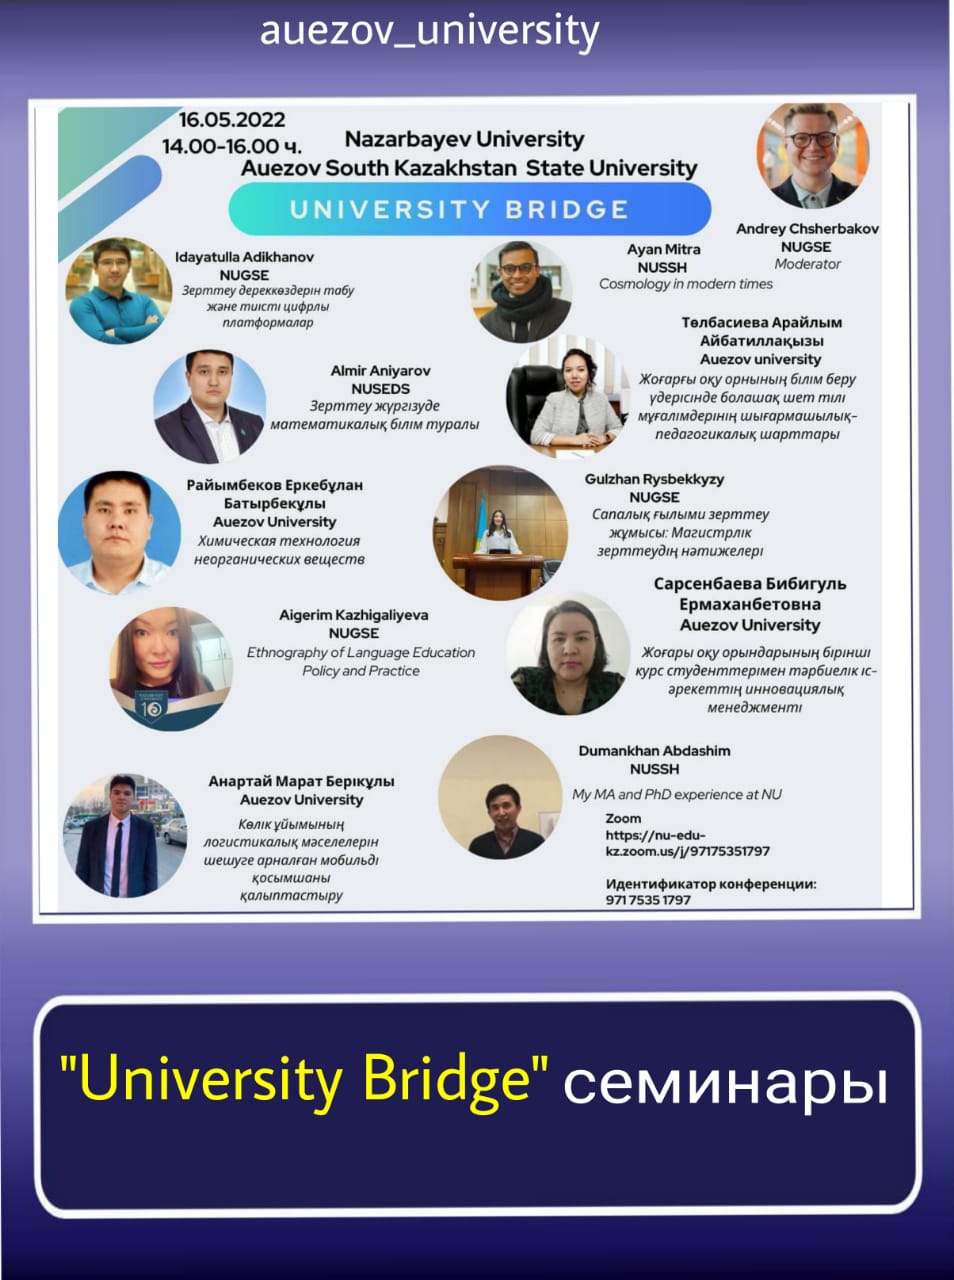 &quot;University Bridge&quot; seminar organized by the Higher School of Education of Nazarbayev University